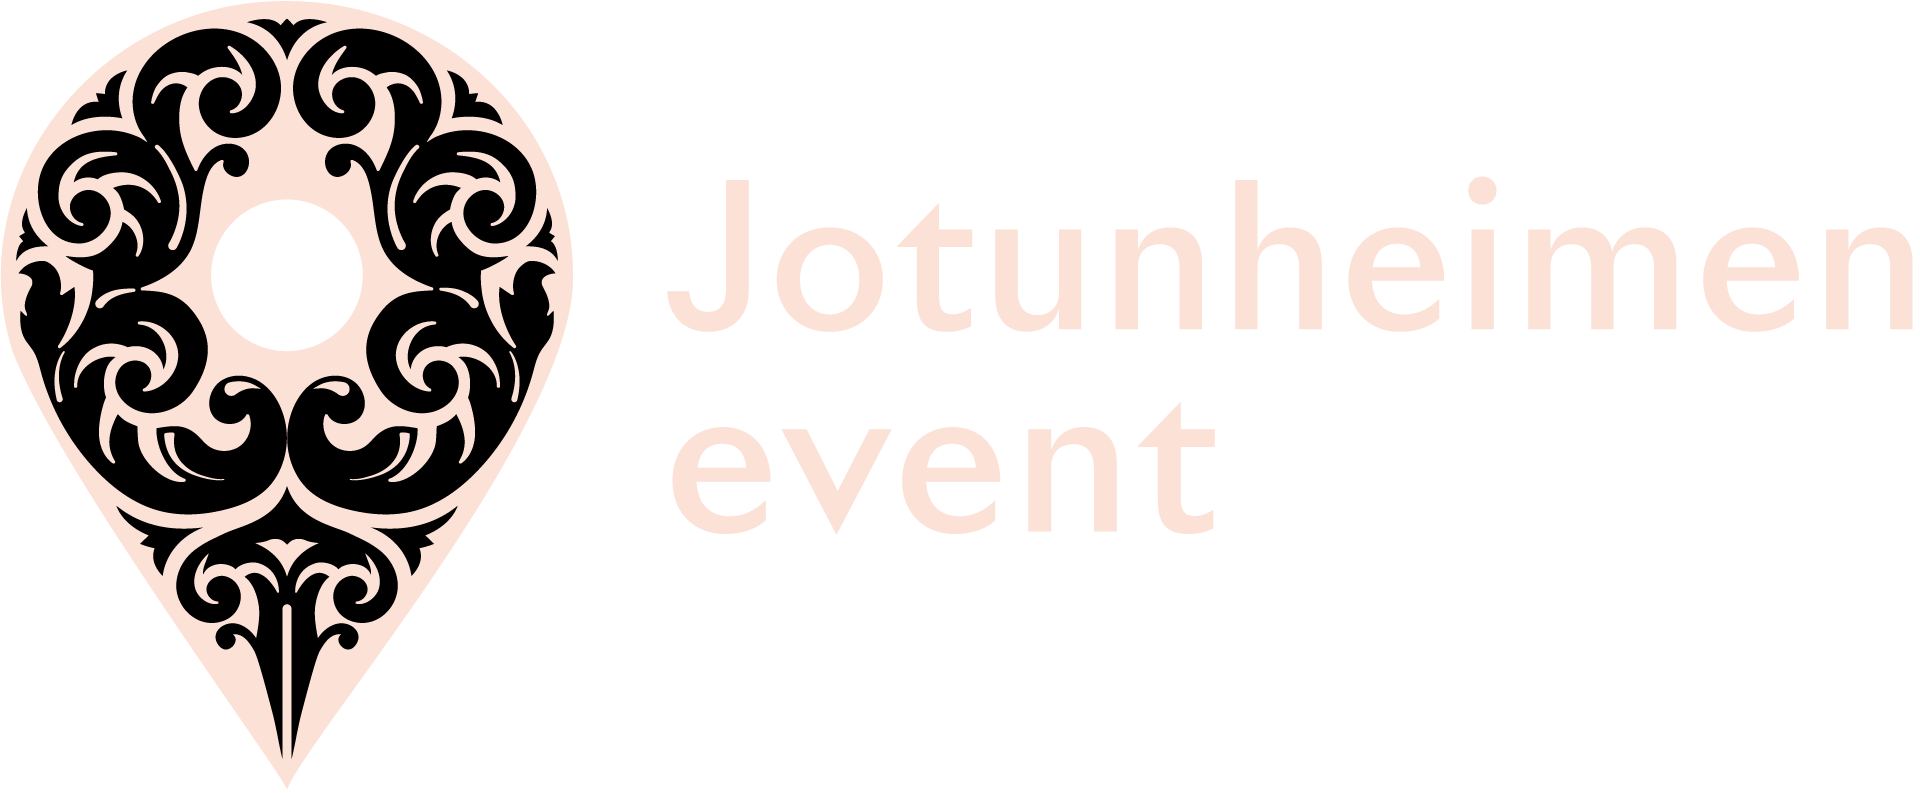 JotunheimenEvent-RosaSort